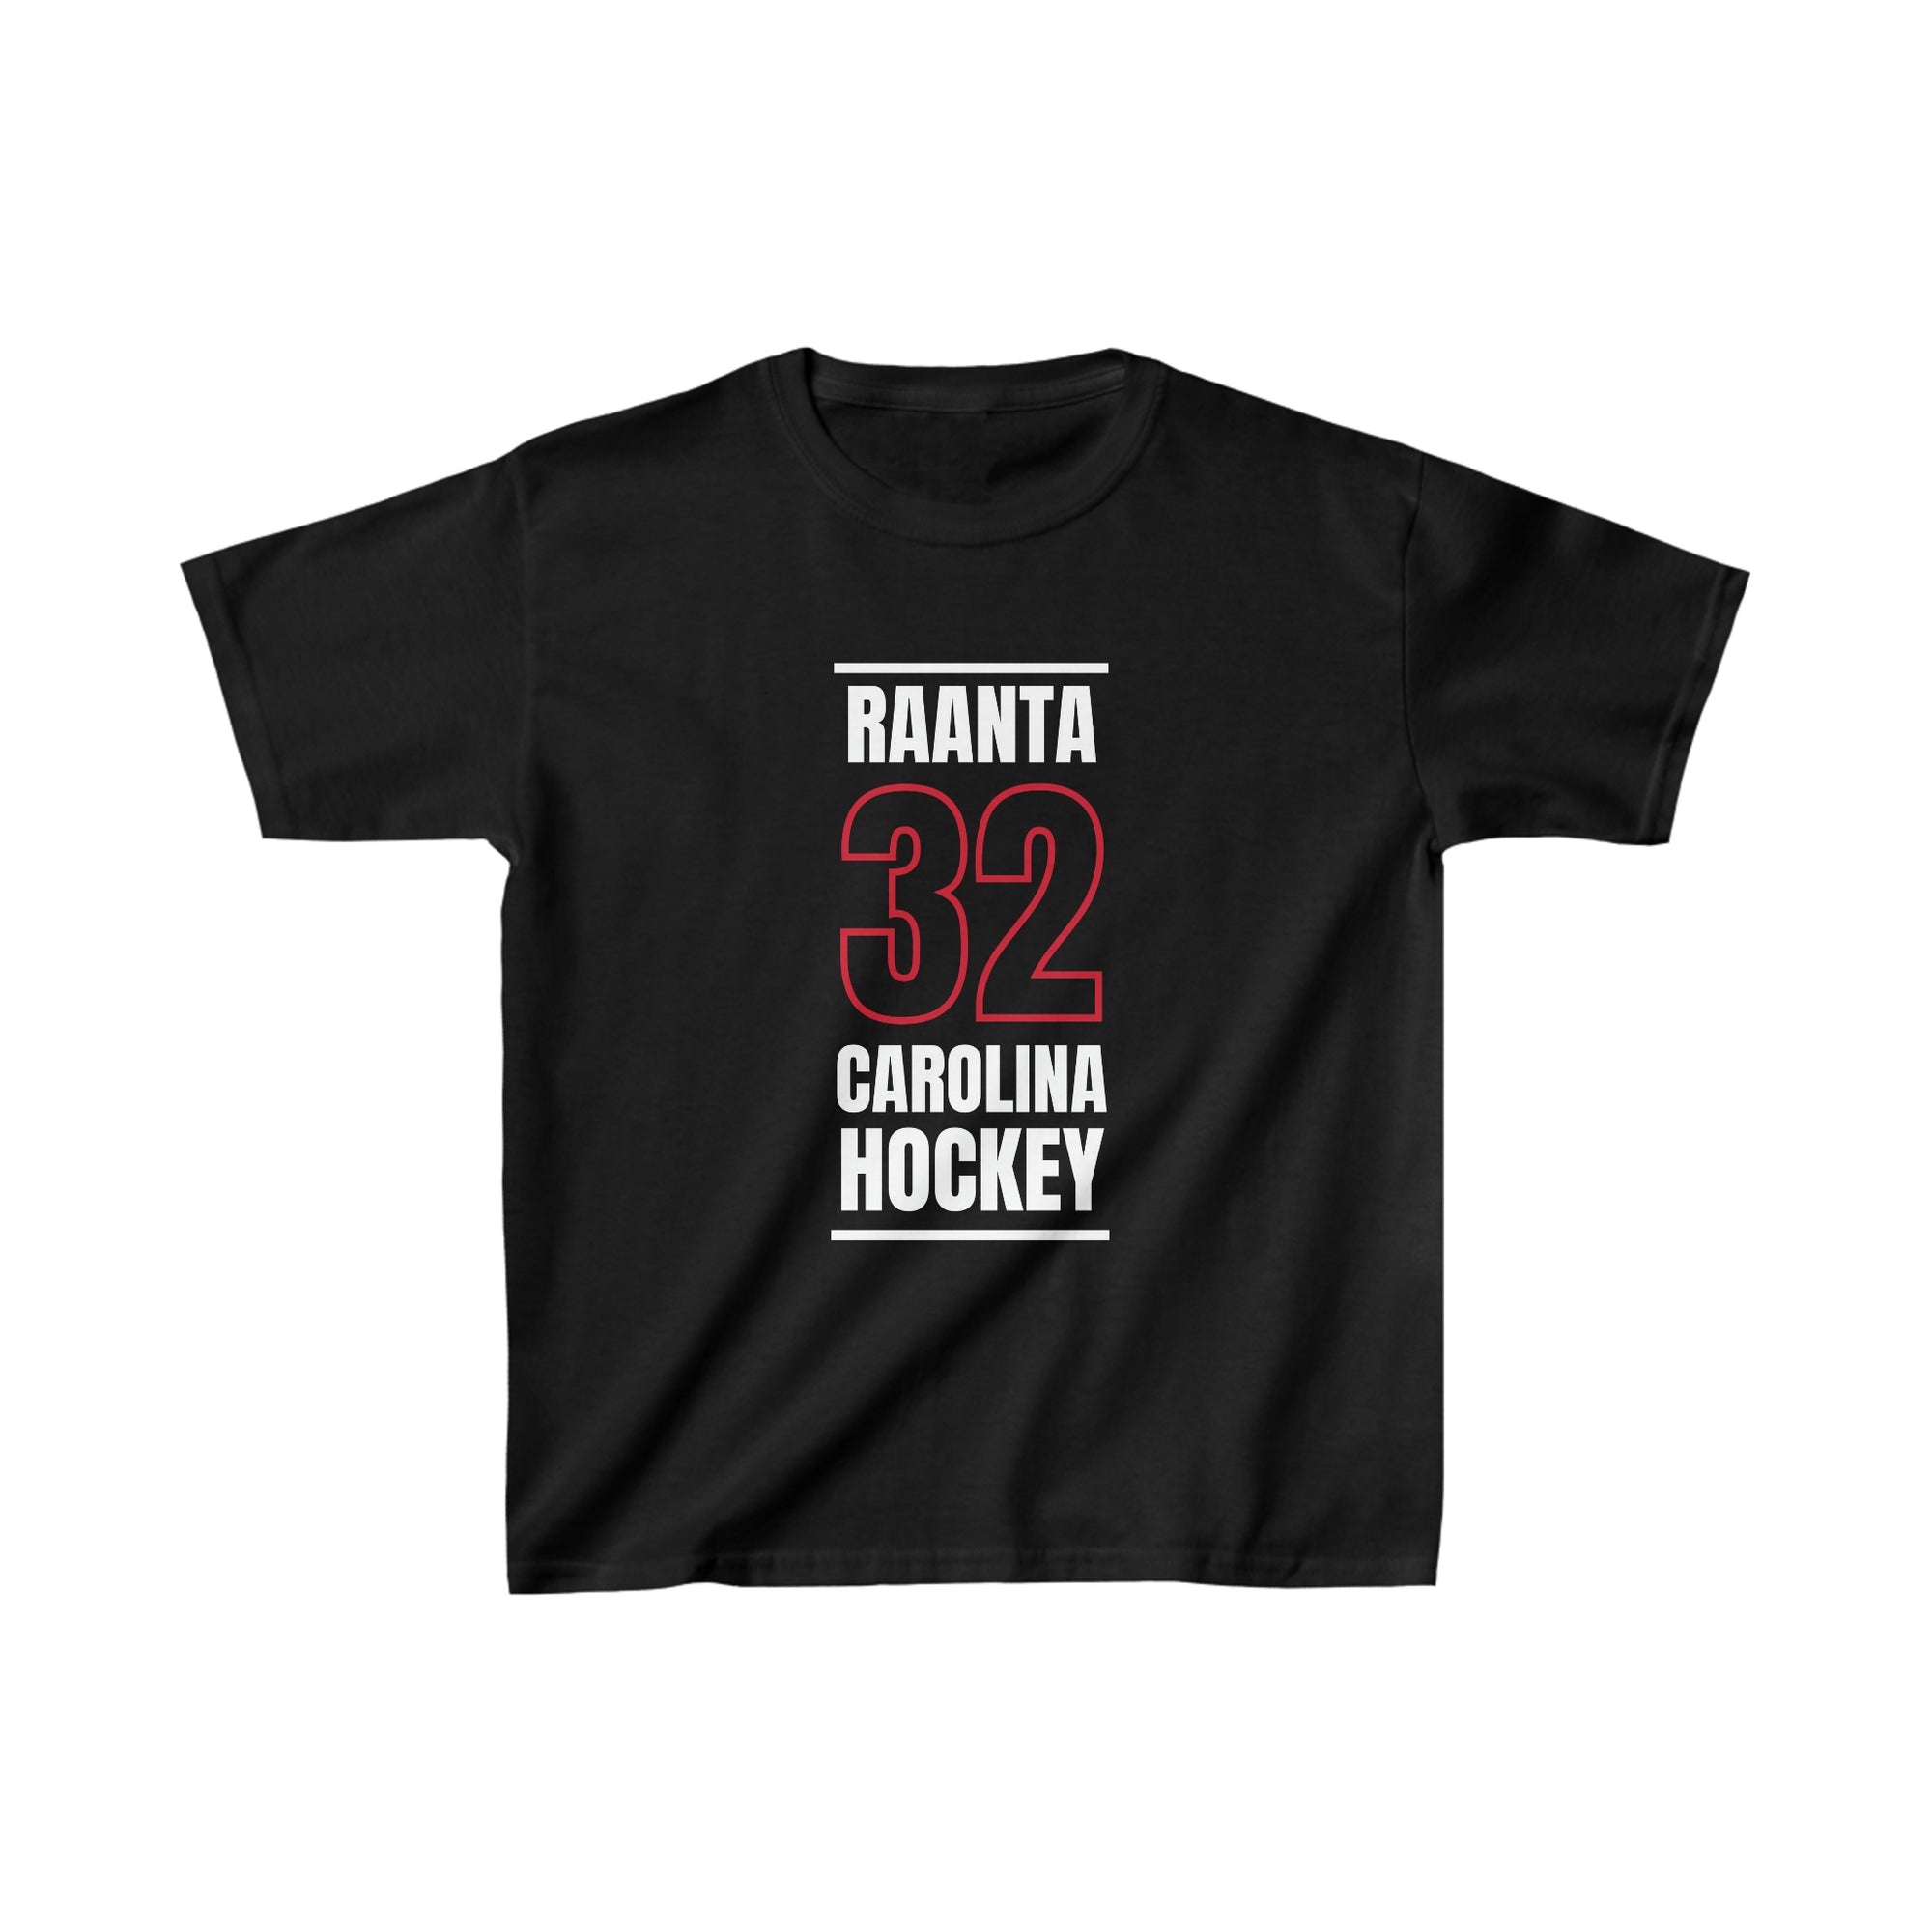 Raanta 32 Carolina Hockey Black Vertical Design Kids Tee